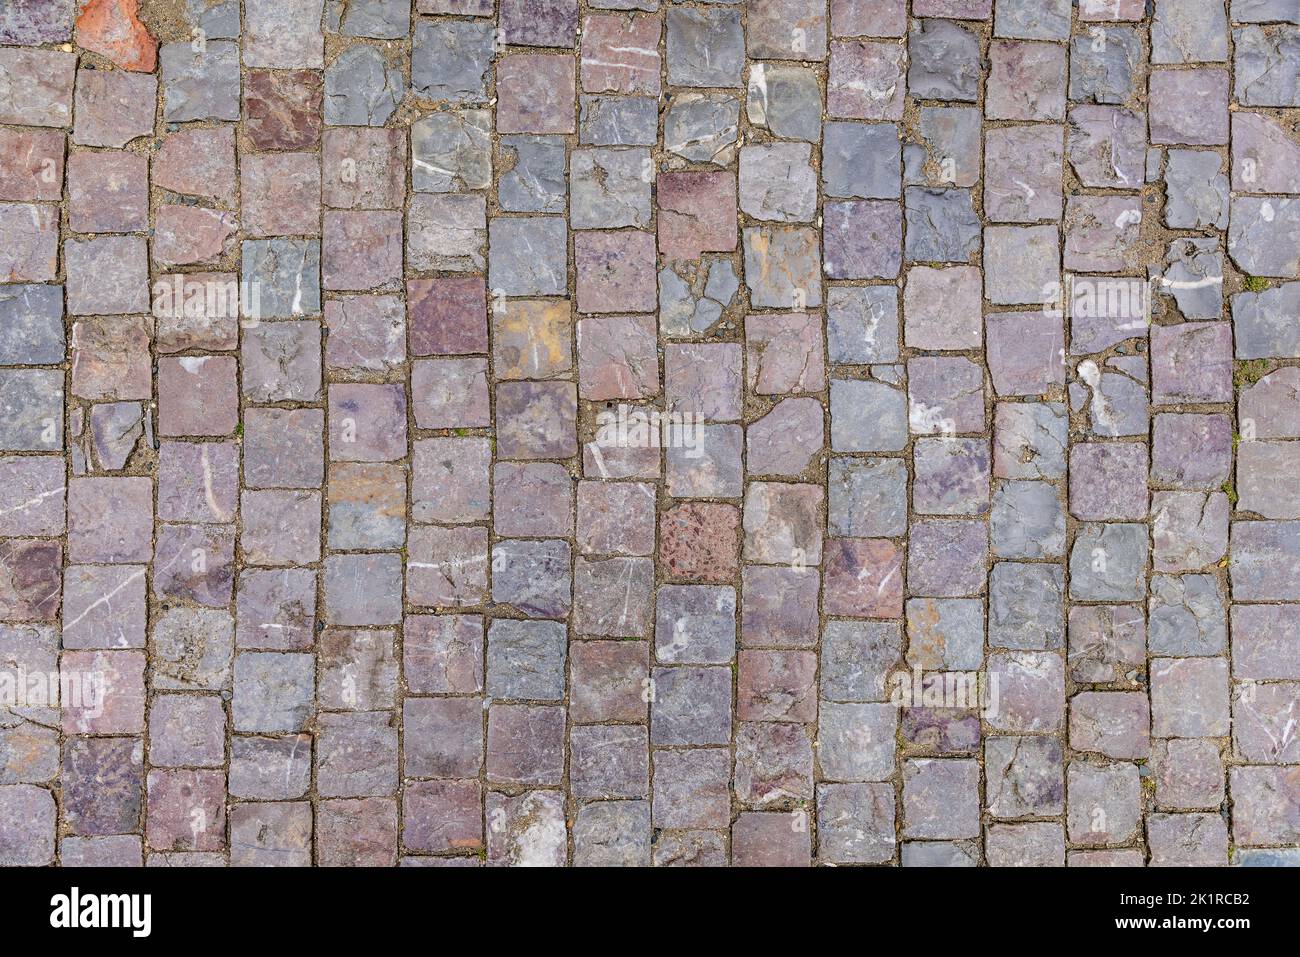 Stone pavement texture. Granite cobblestoned pavement background. Stock Photo